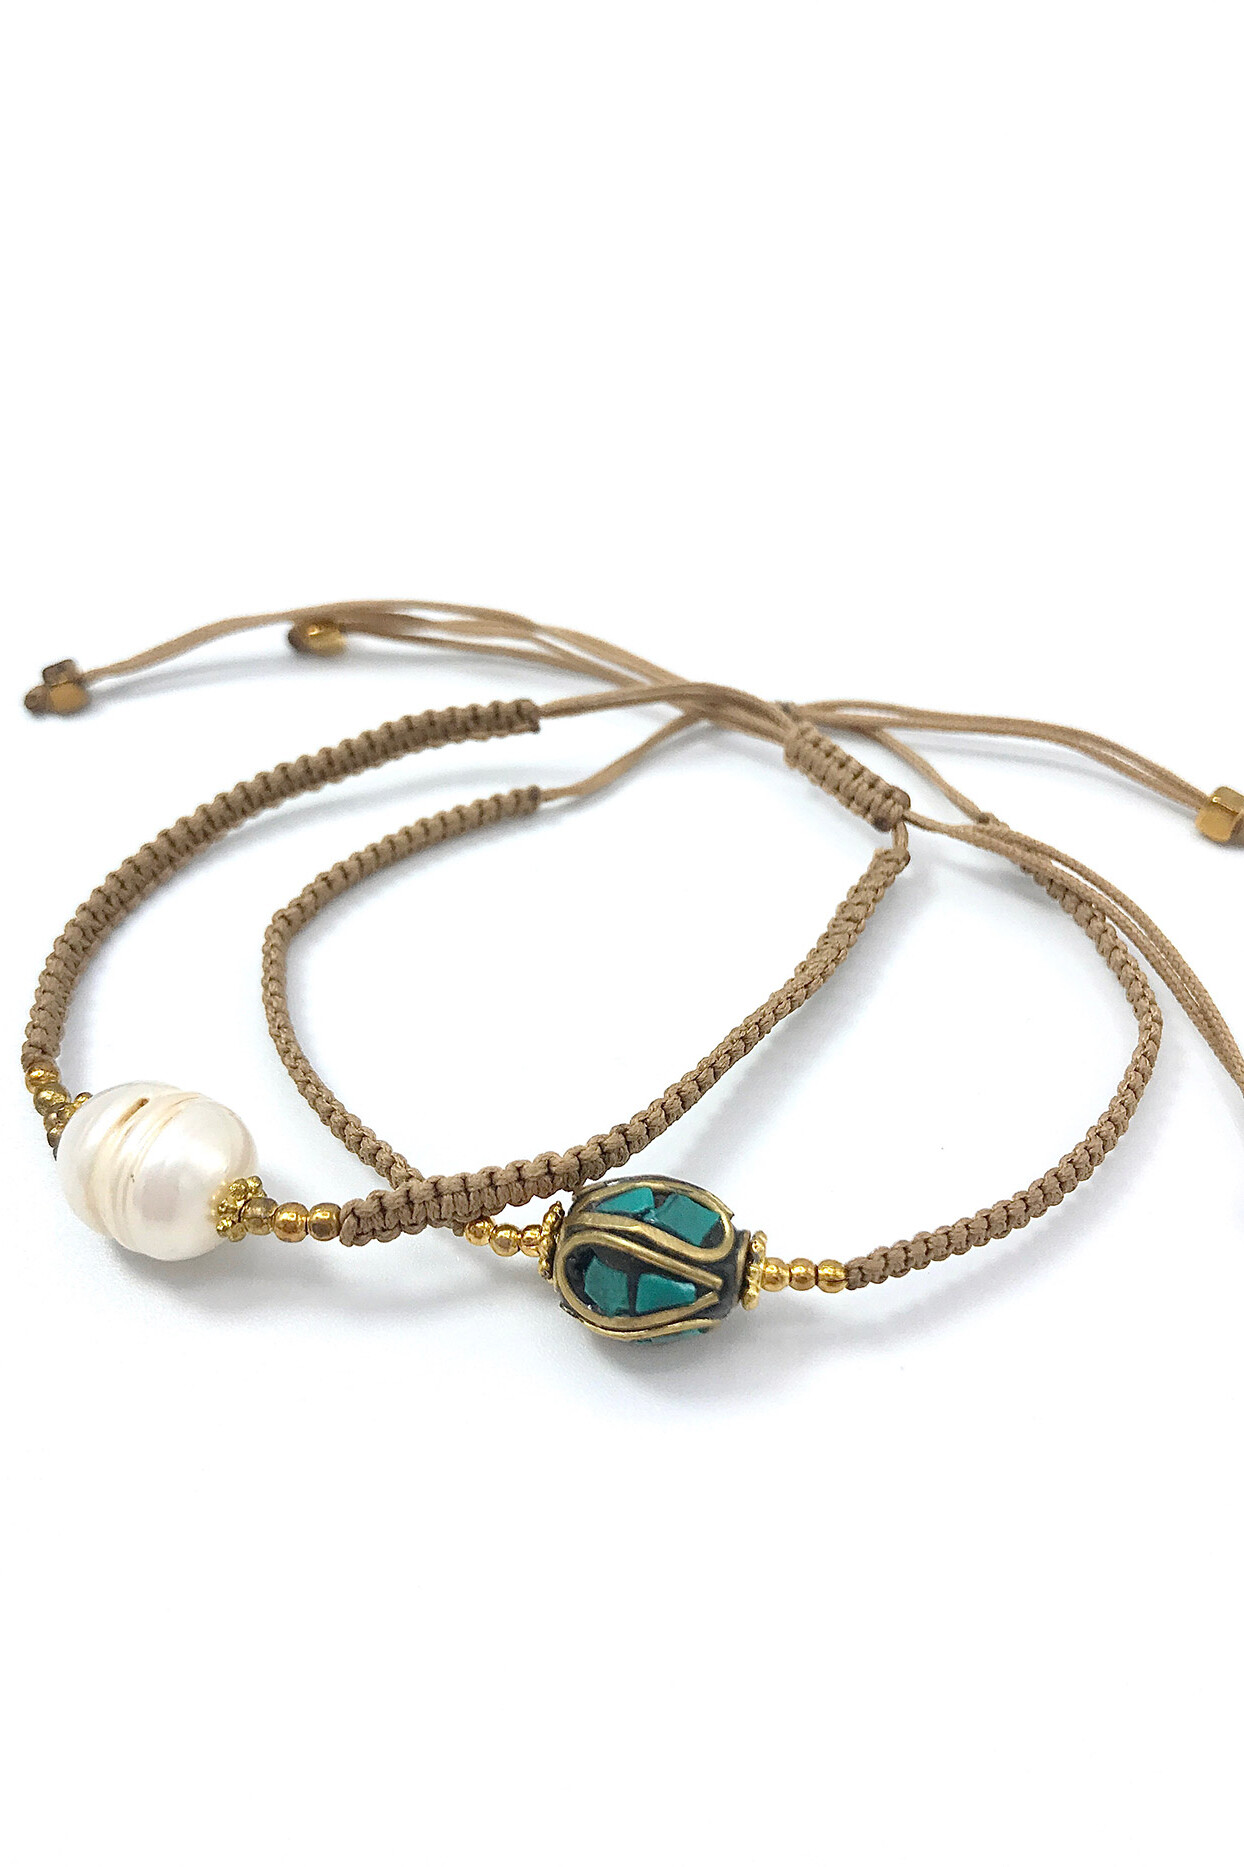 bracelet-perla-2